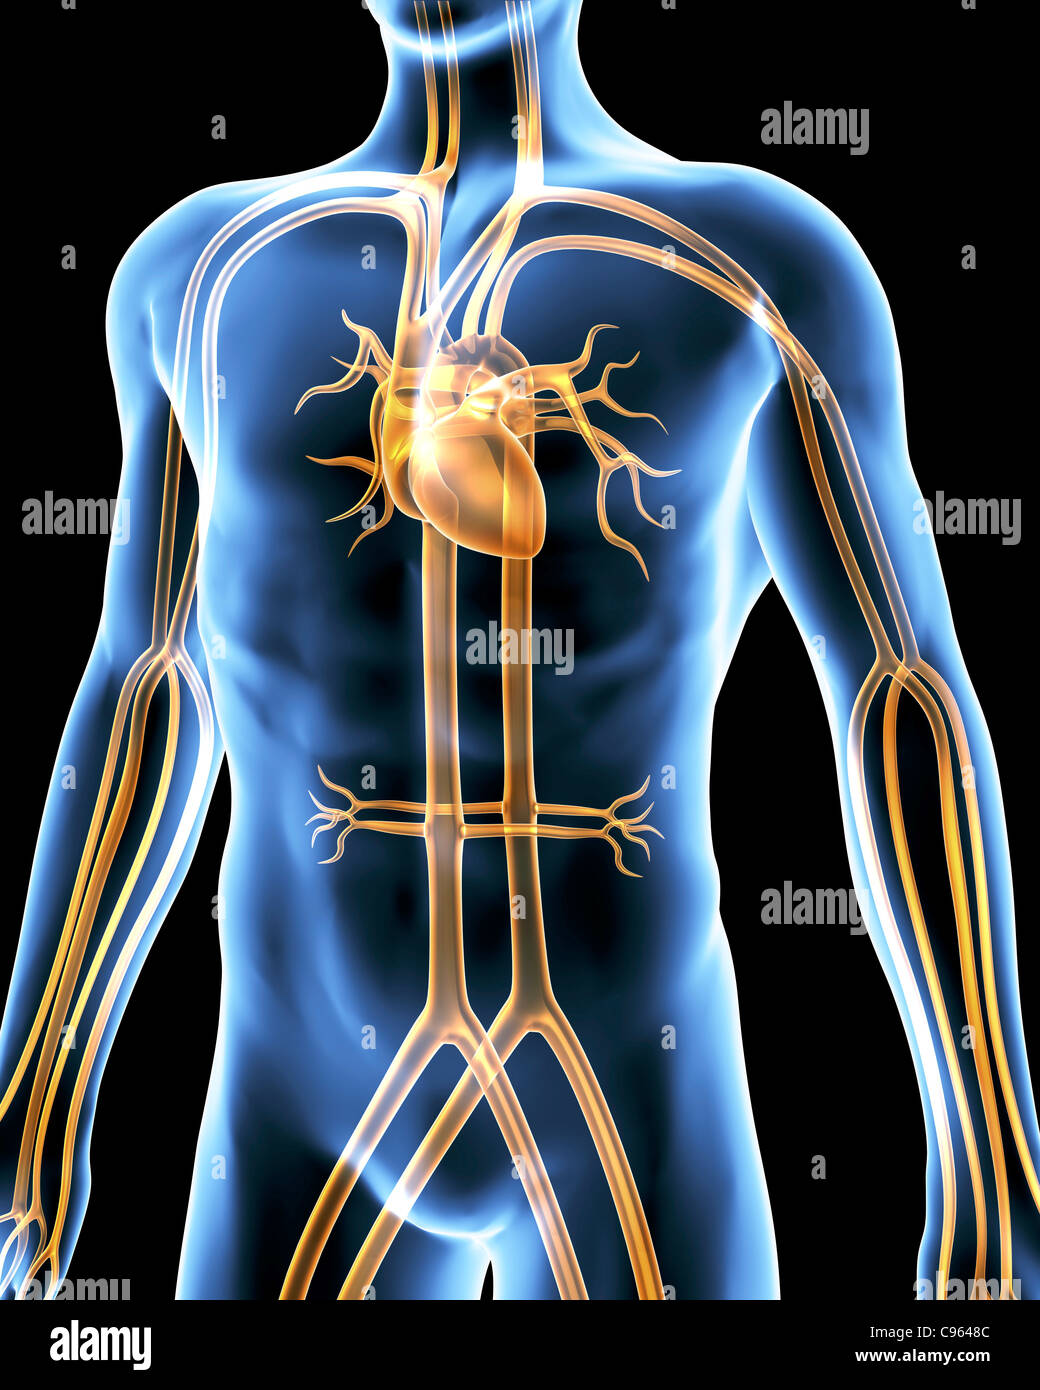 Cardiovascular system. Computer artwork of a male torso and the cardiovascular system. Stock Photo